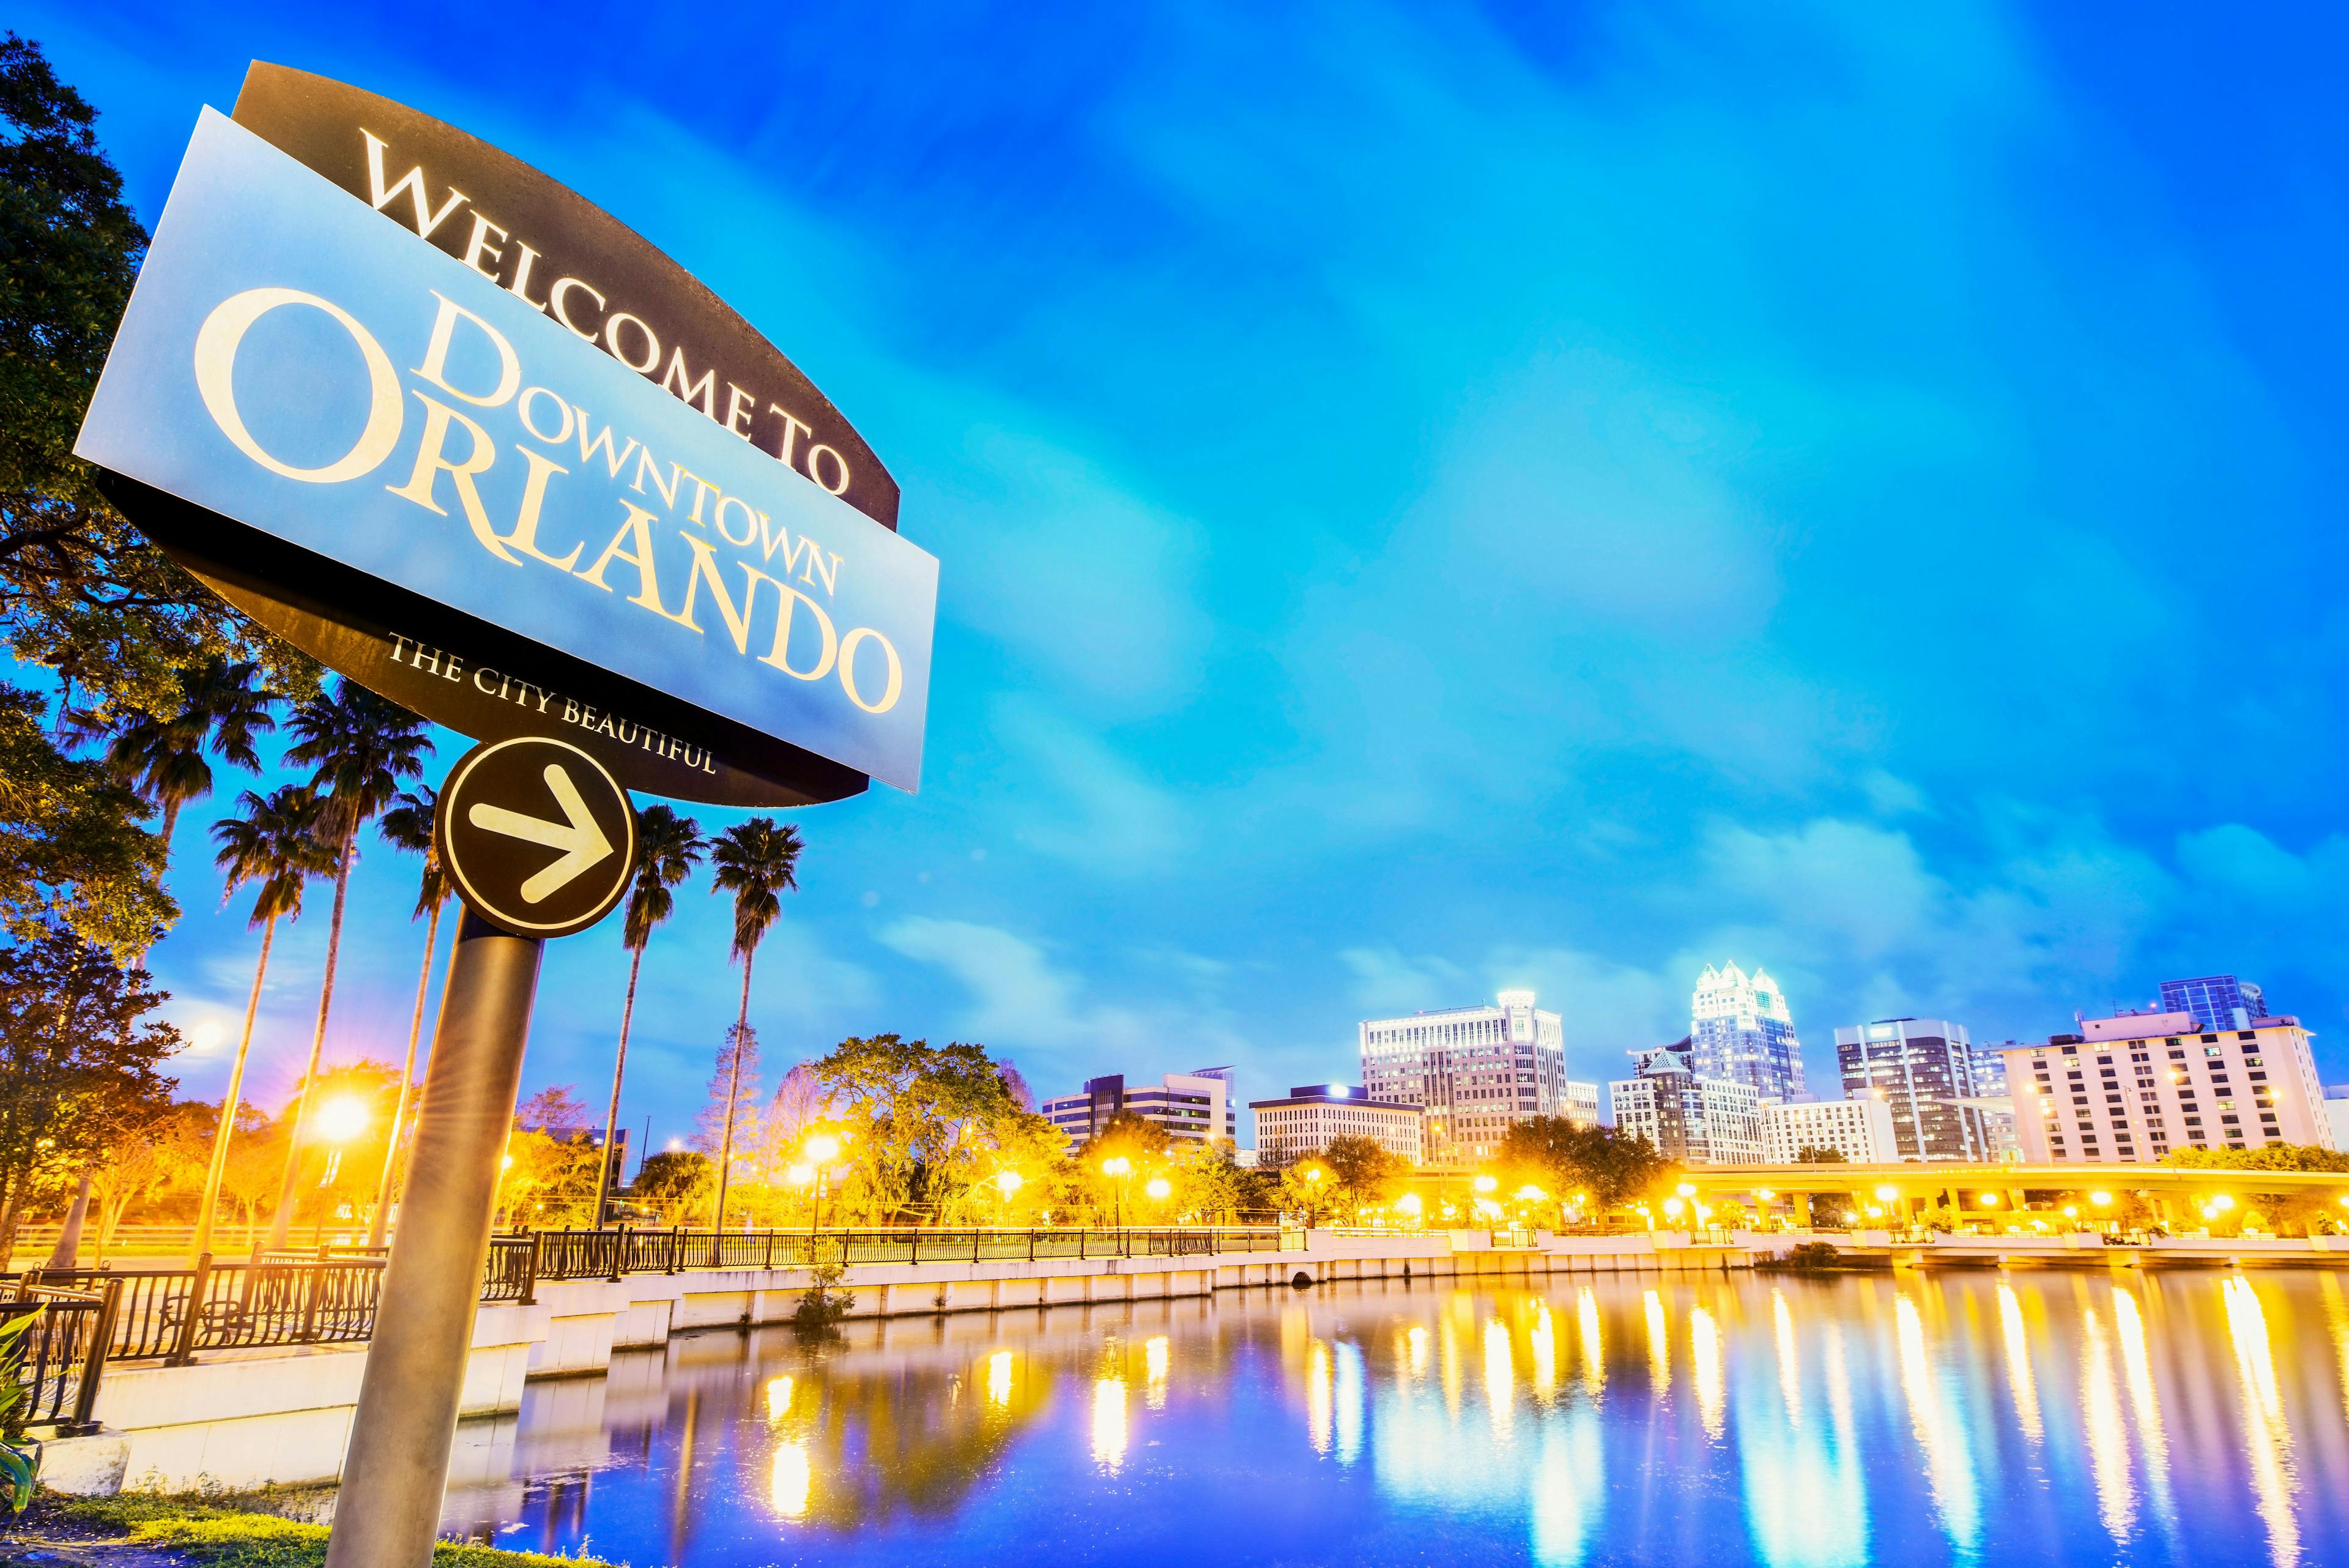 Downtown Orlando. City skyline. | Image Credit: aphotostory -stock.adobe.com